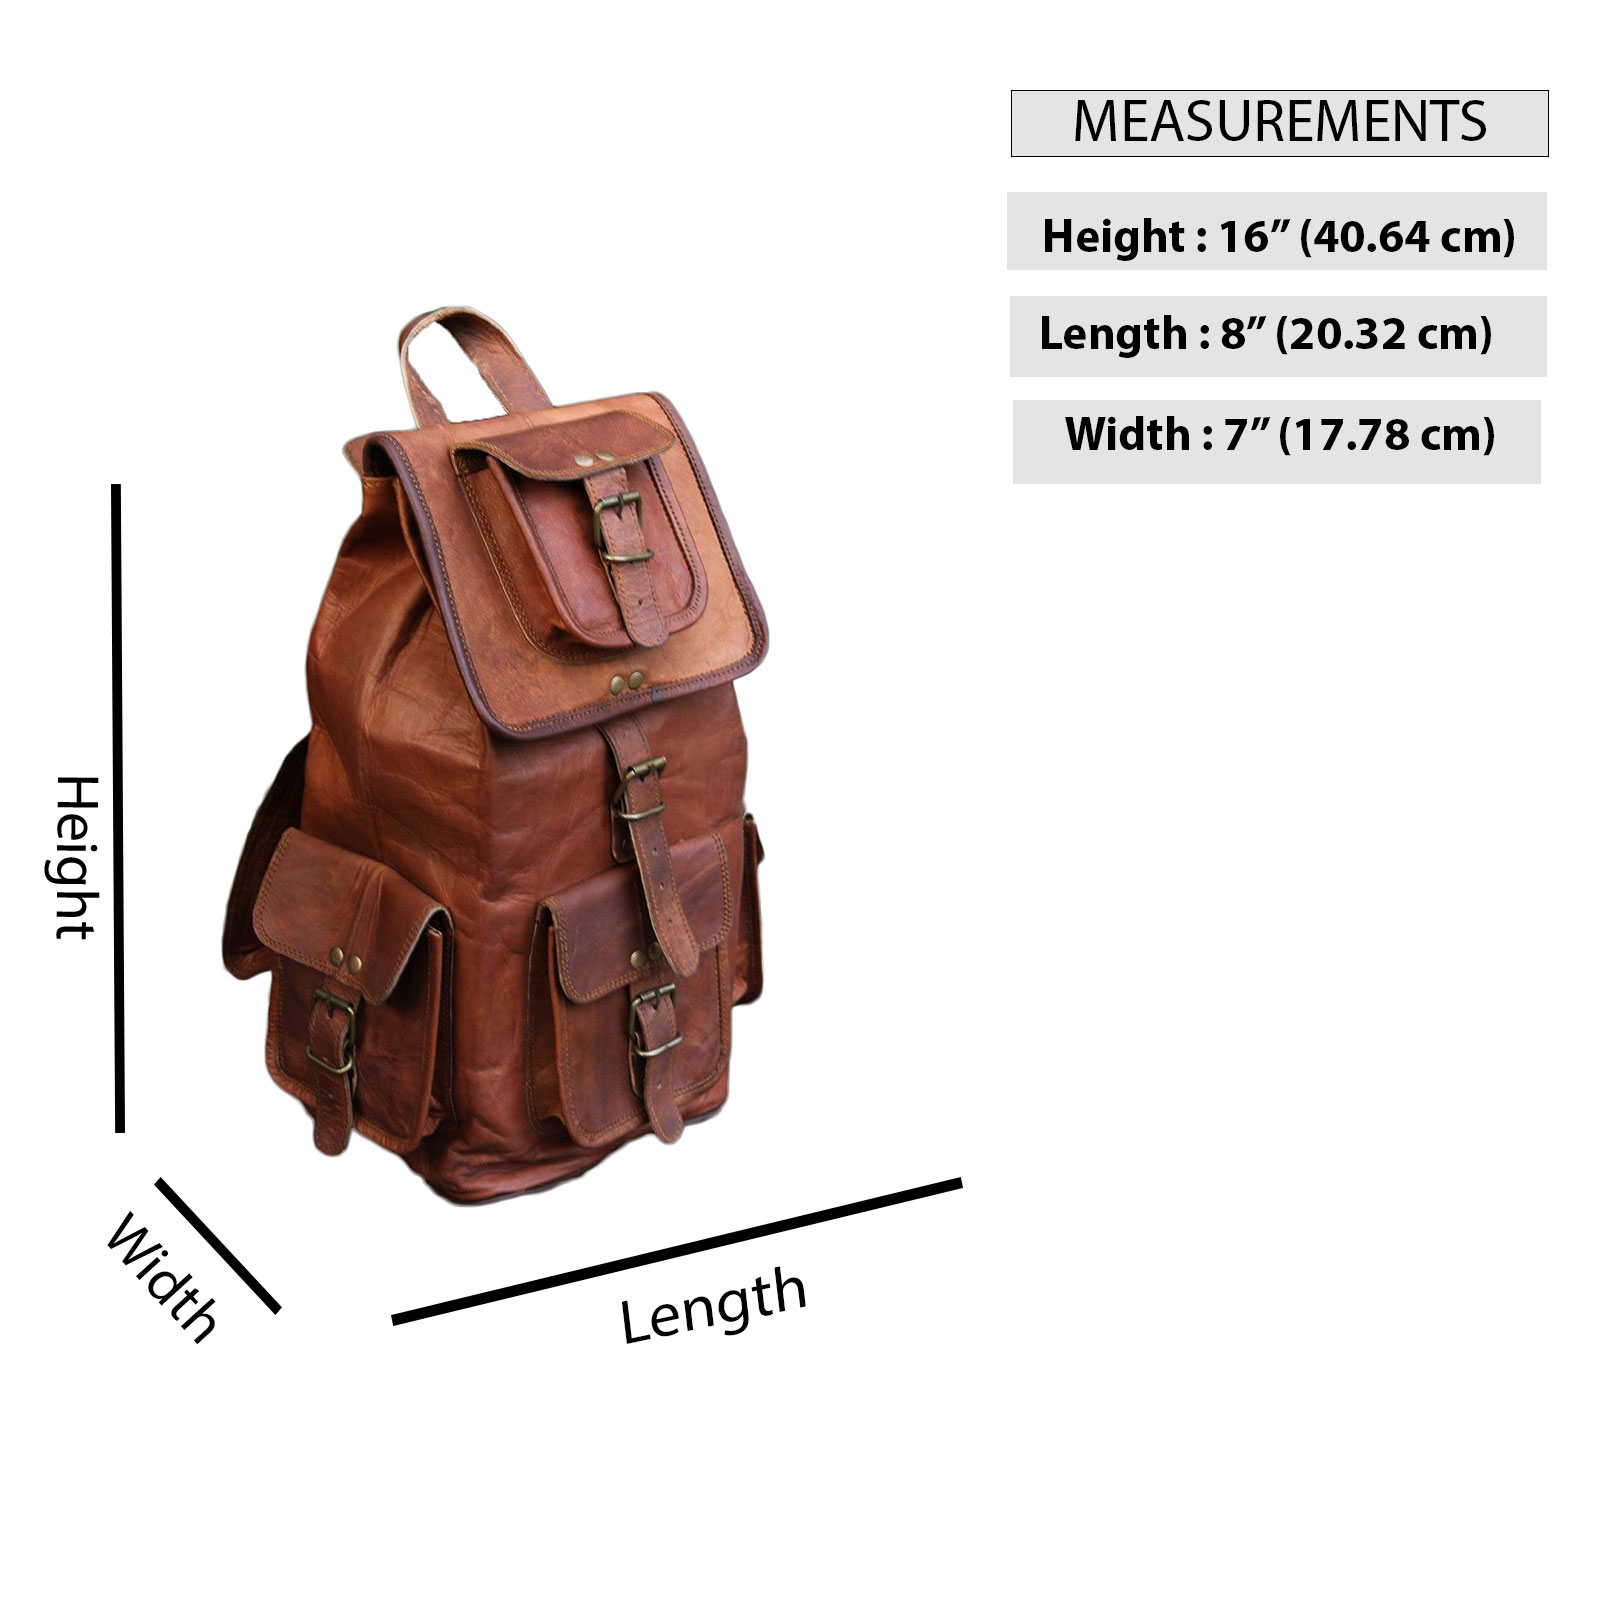 Madosh Genuine Leather Backpacks Hiking Rucksack Brown Camping Daypacks Travel Luggage Bag - image 3 of 6